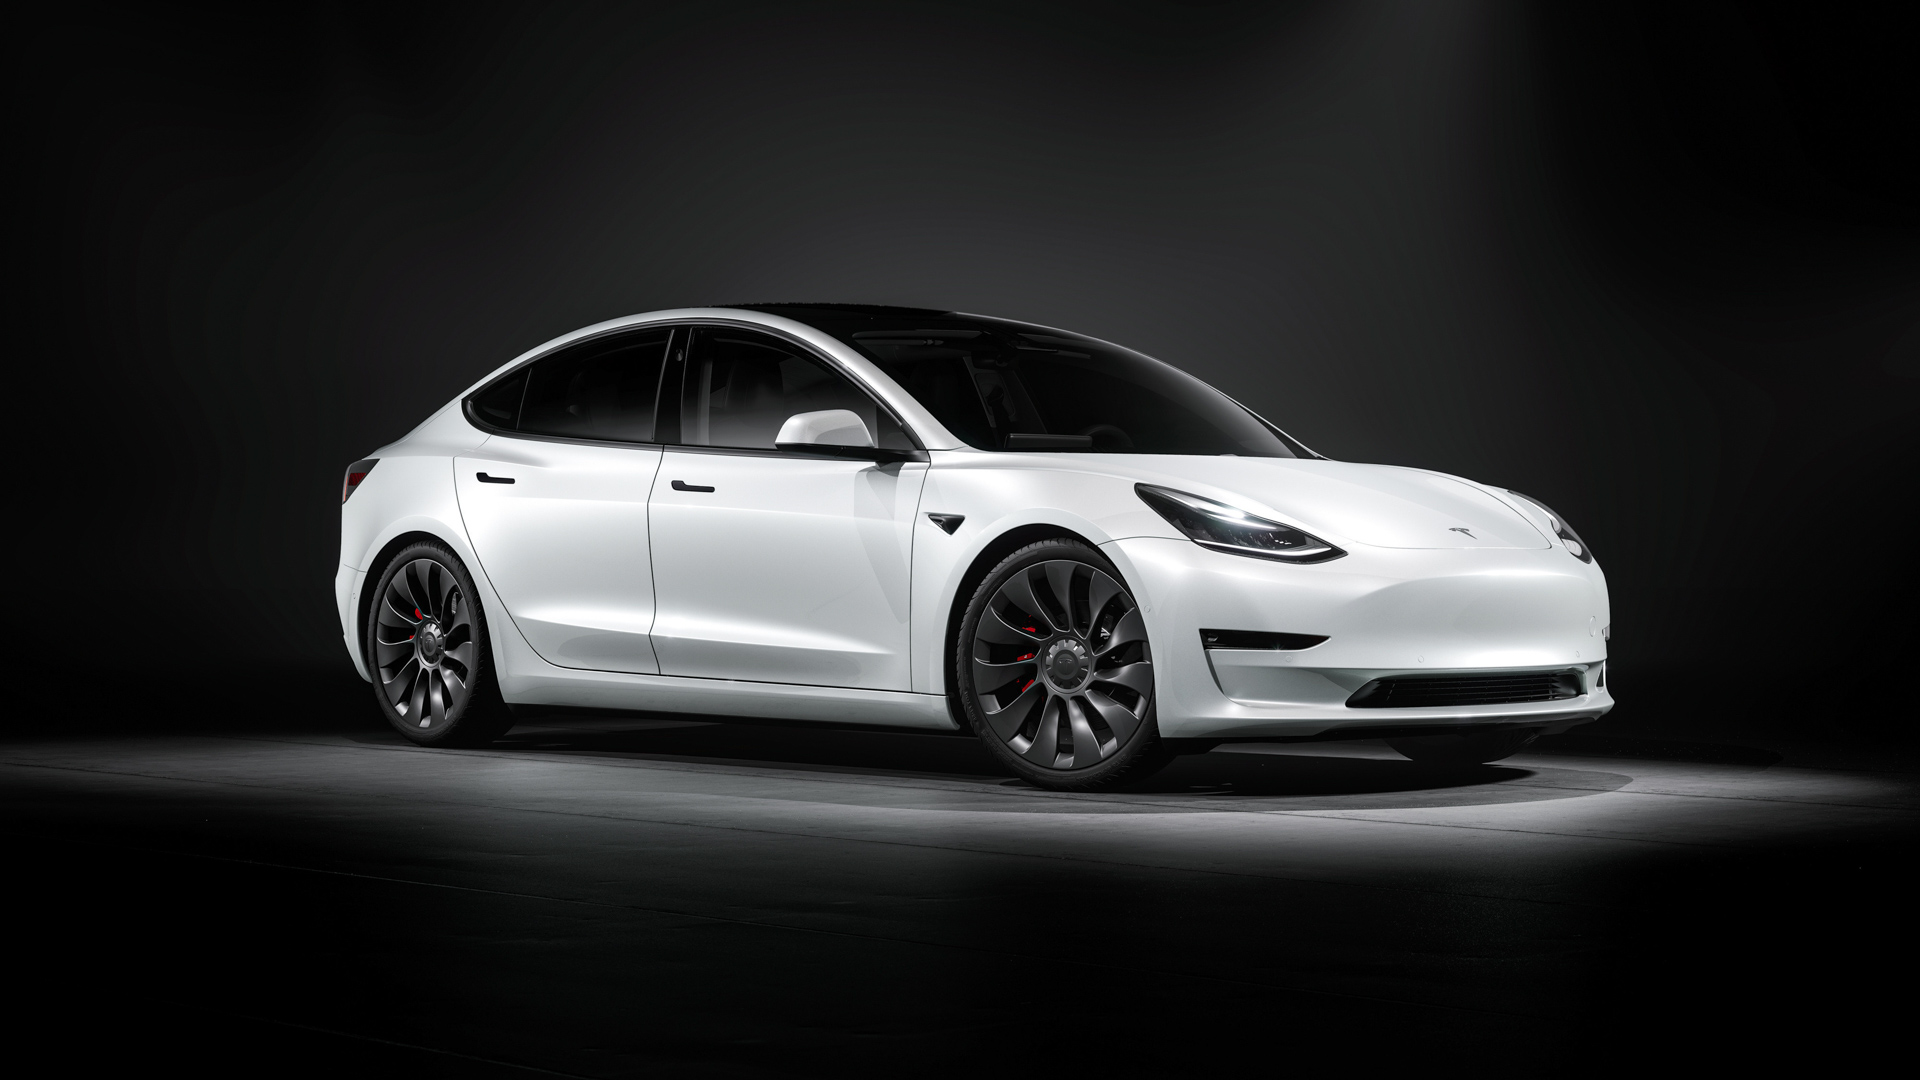 Tesla recalls close to 11M vehicles due to windows that